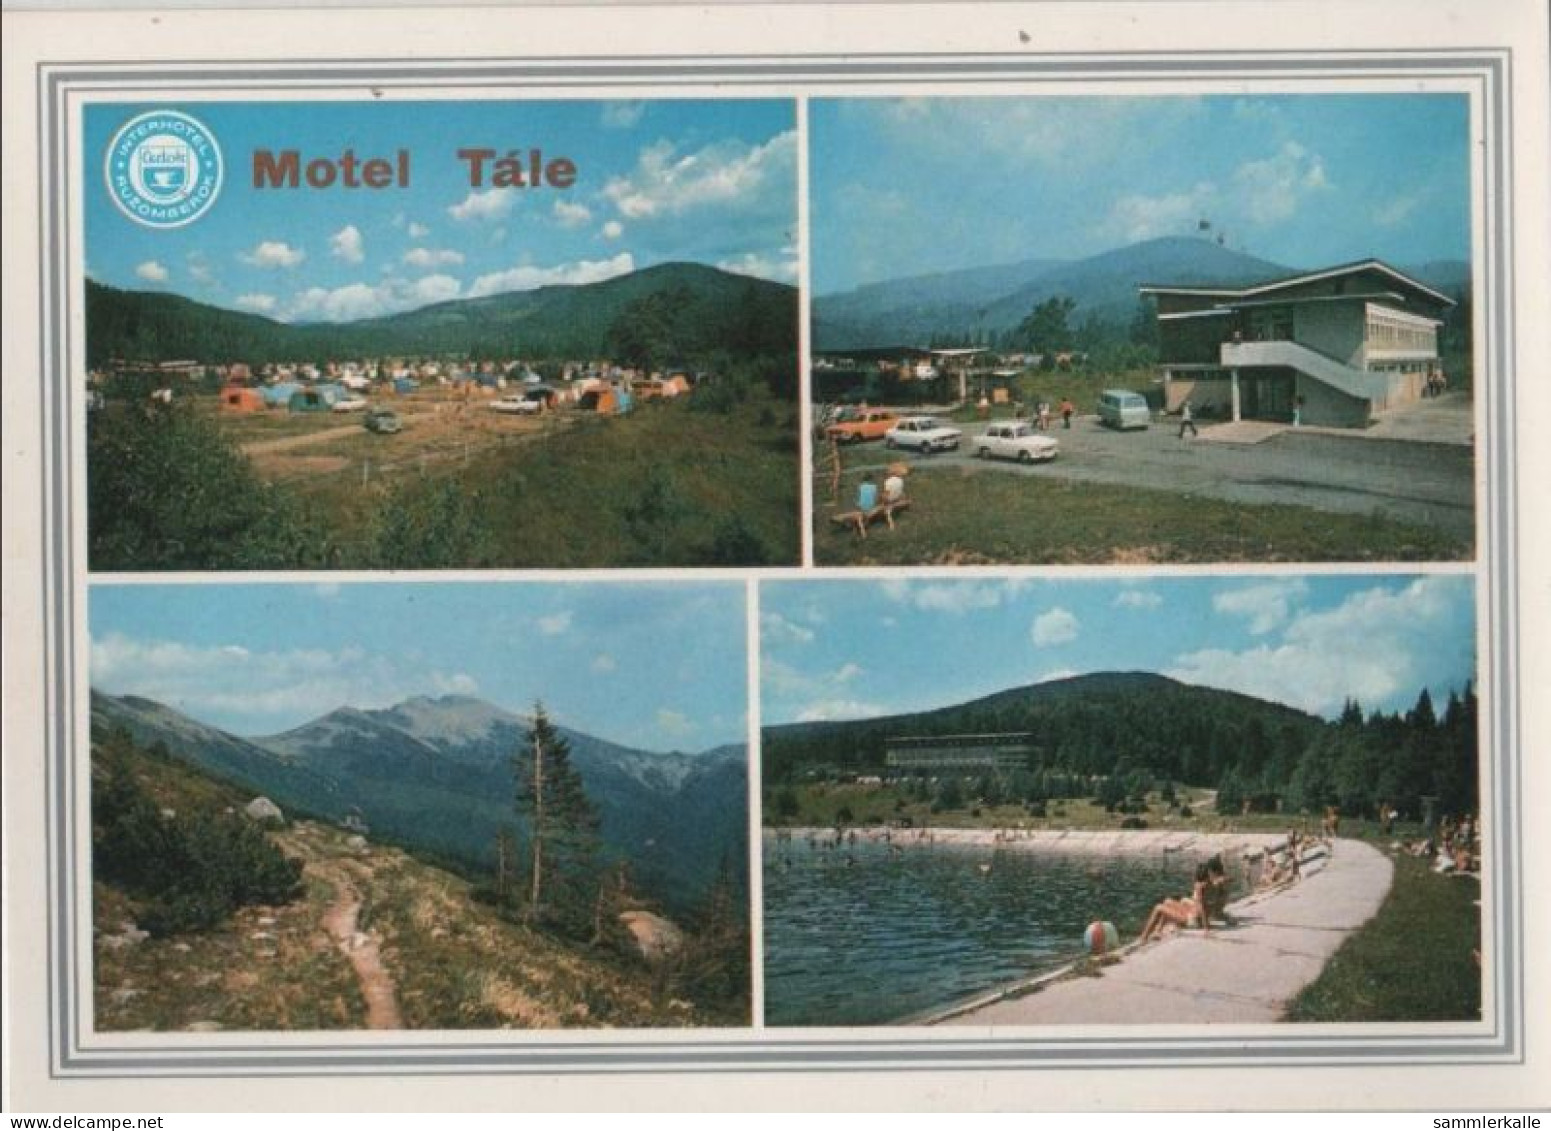 109584 - Nizke Tatry - Niedere Tatra - Tschechien - Motel Tale - Slowakei